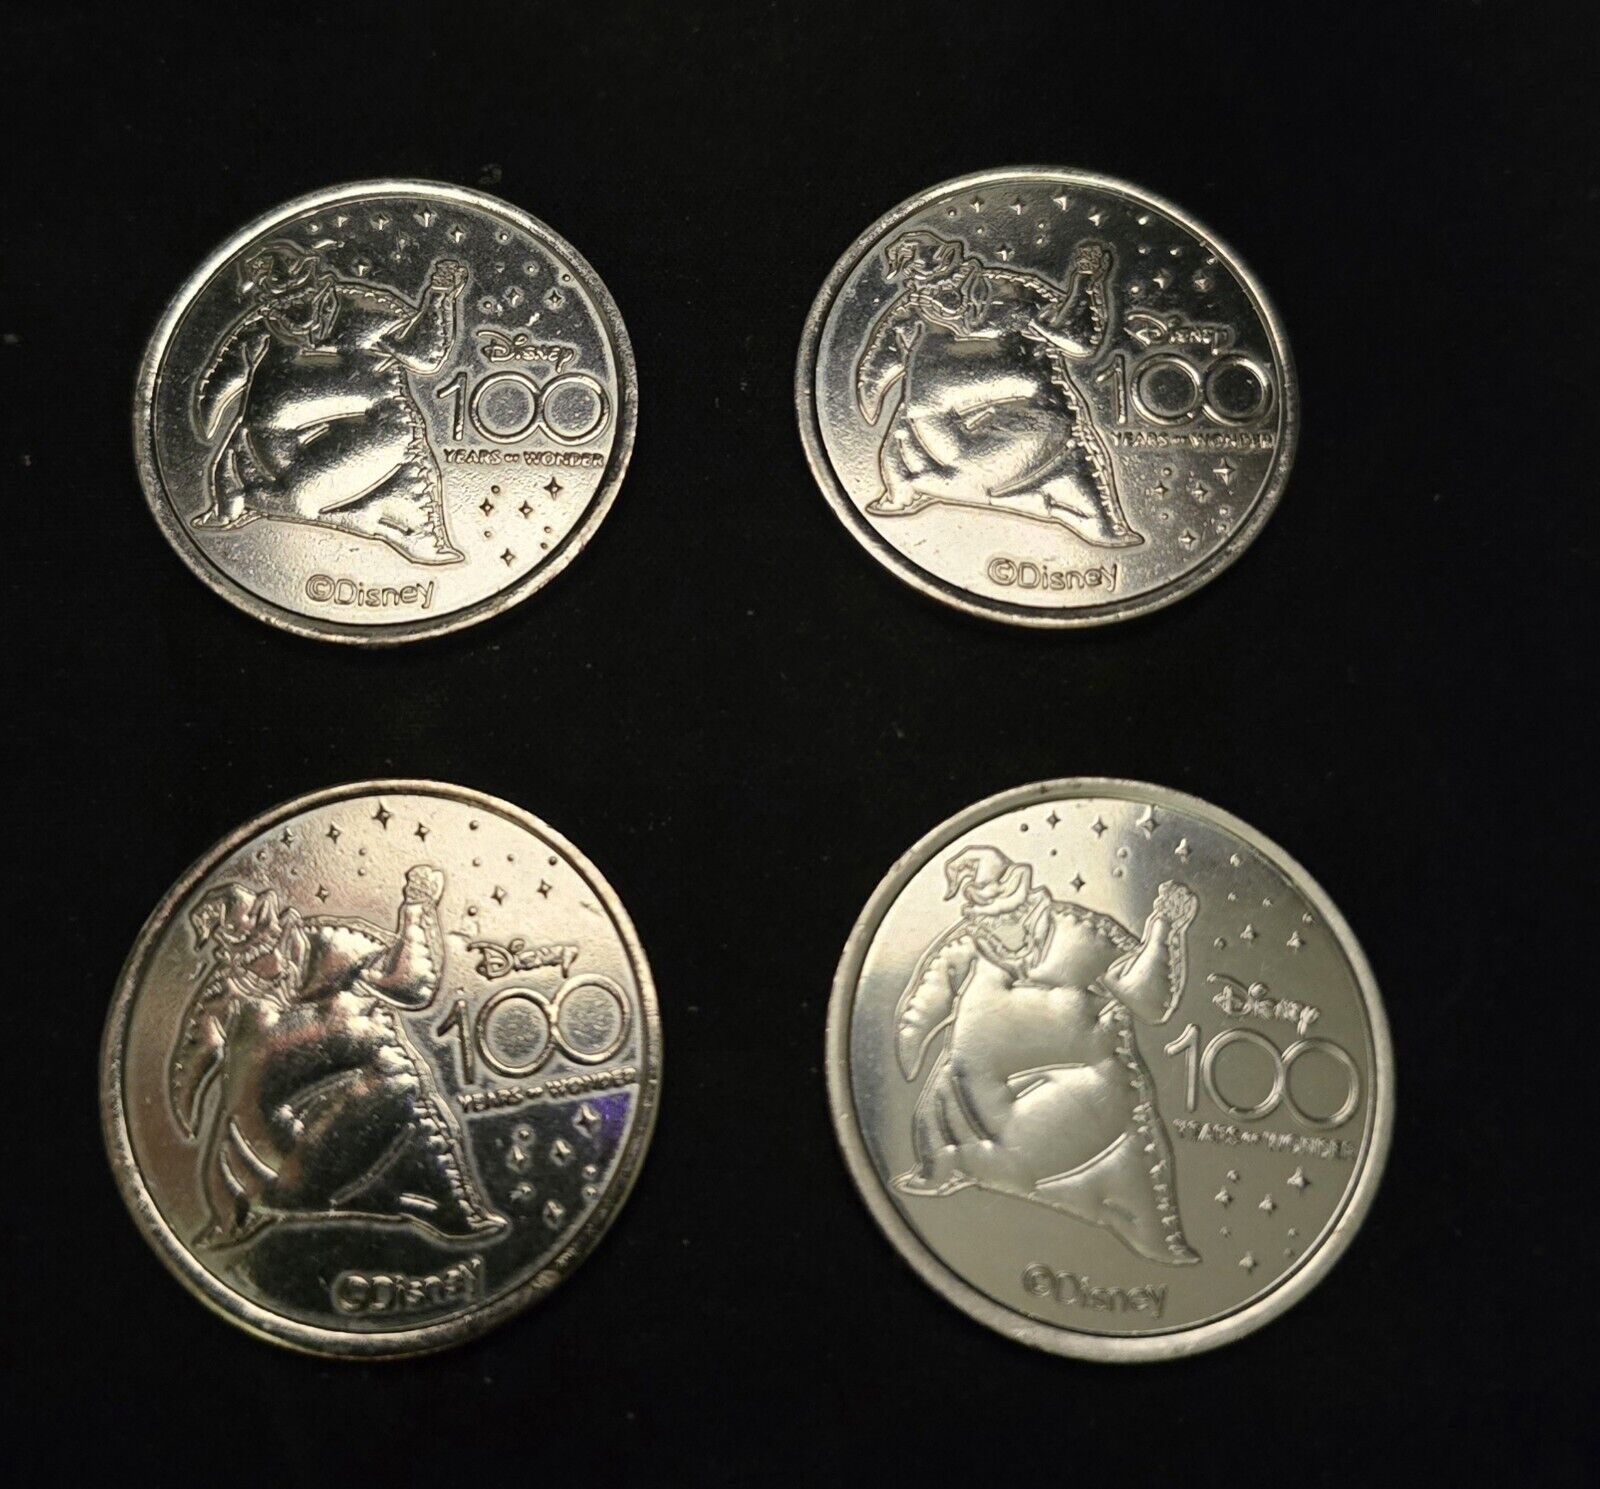 Disney 100th Anniversary Medallion Coin Disneyland Oogie Boogie - A SET OF 4 